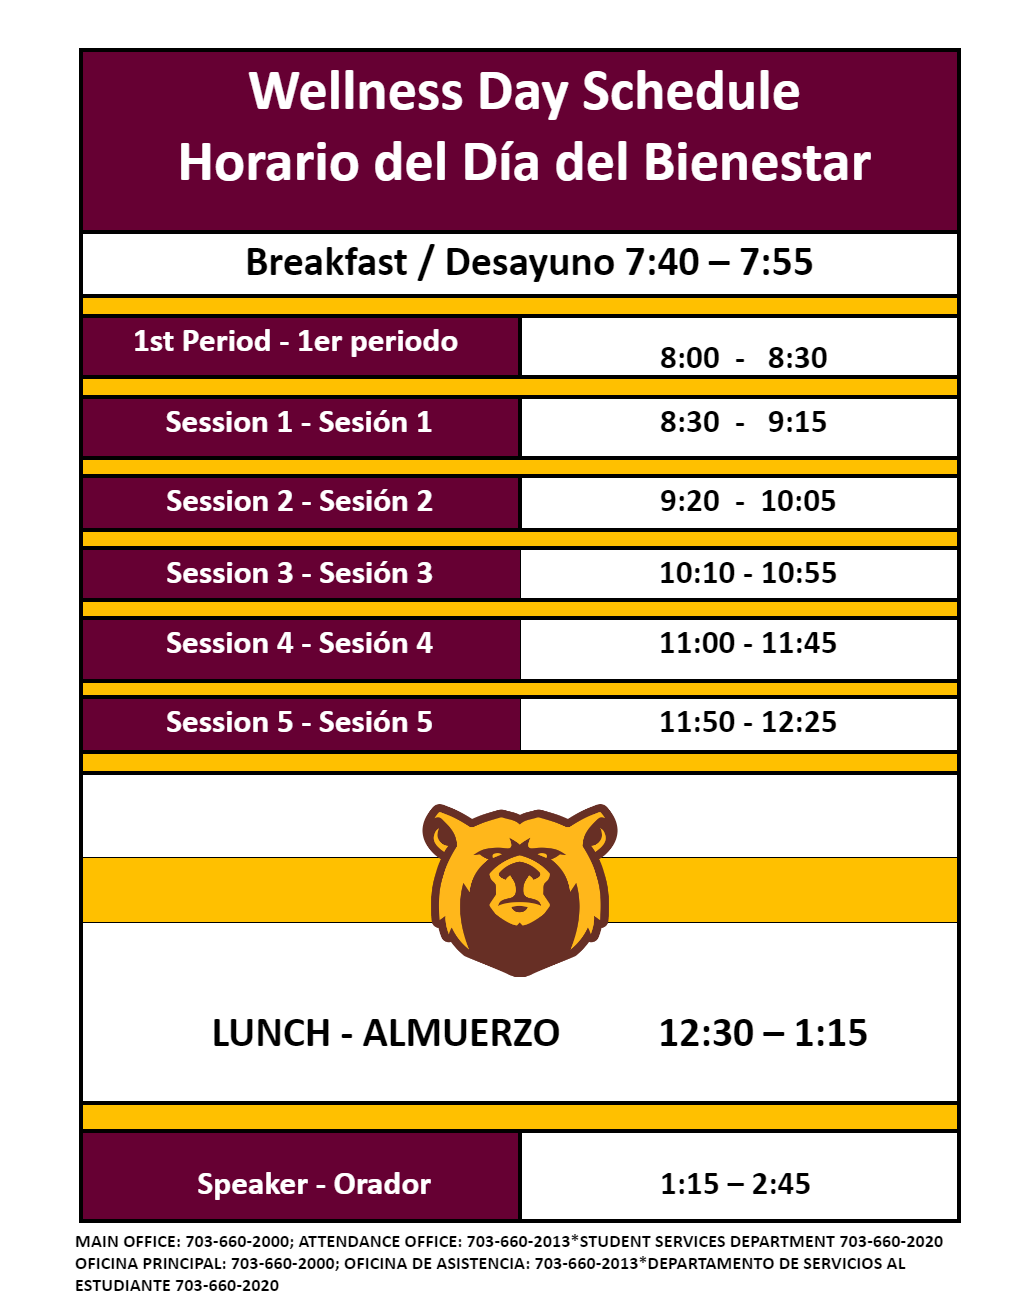 Wellness Day Schedule English & Spanish